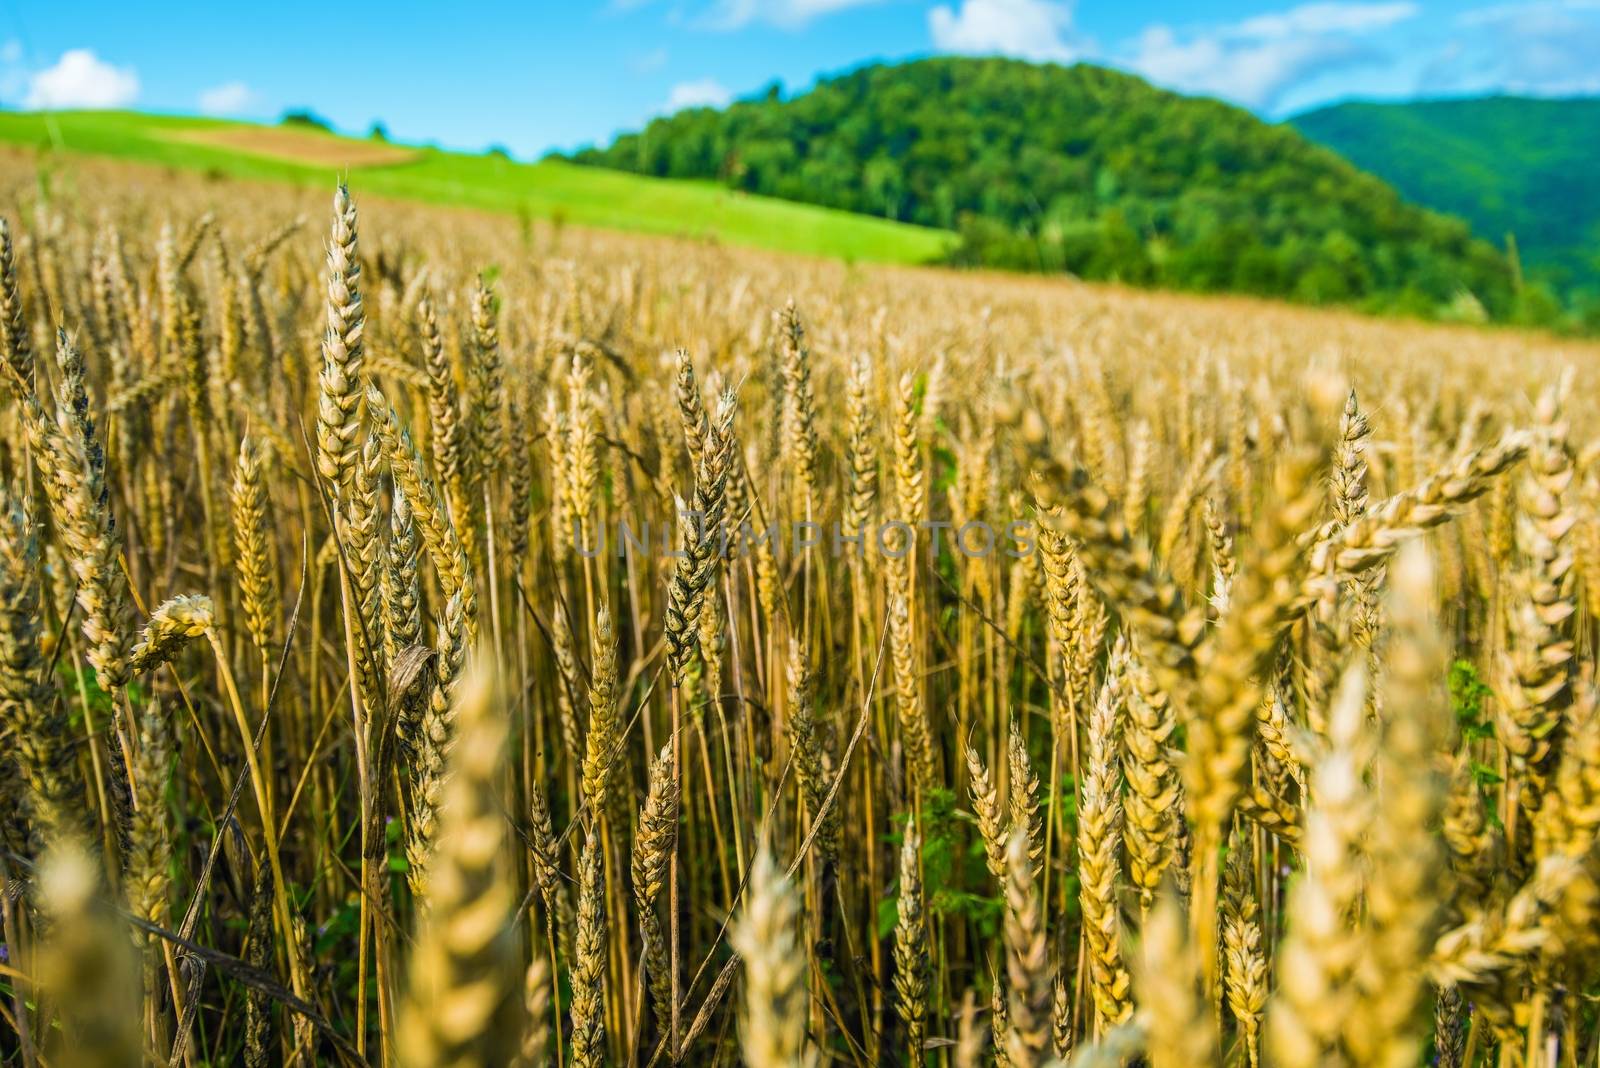 Organic Rye Fields in Bieszczady, Poland, Europe. Agriculture Theme. Rye Ears